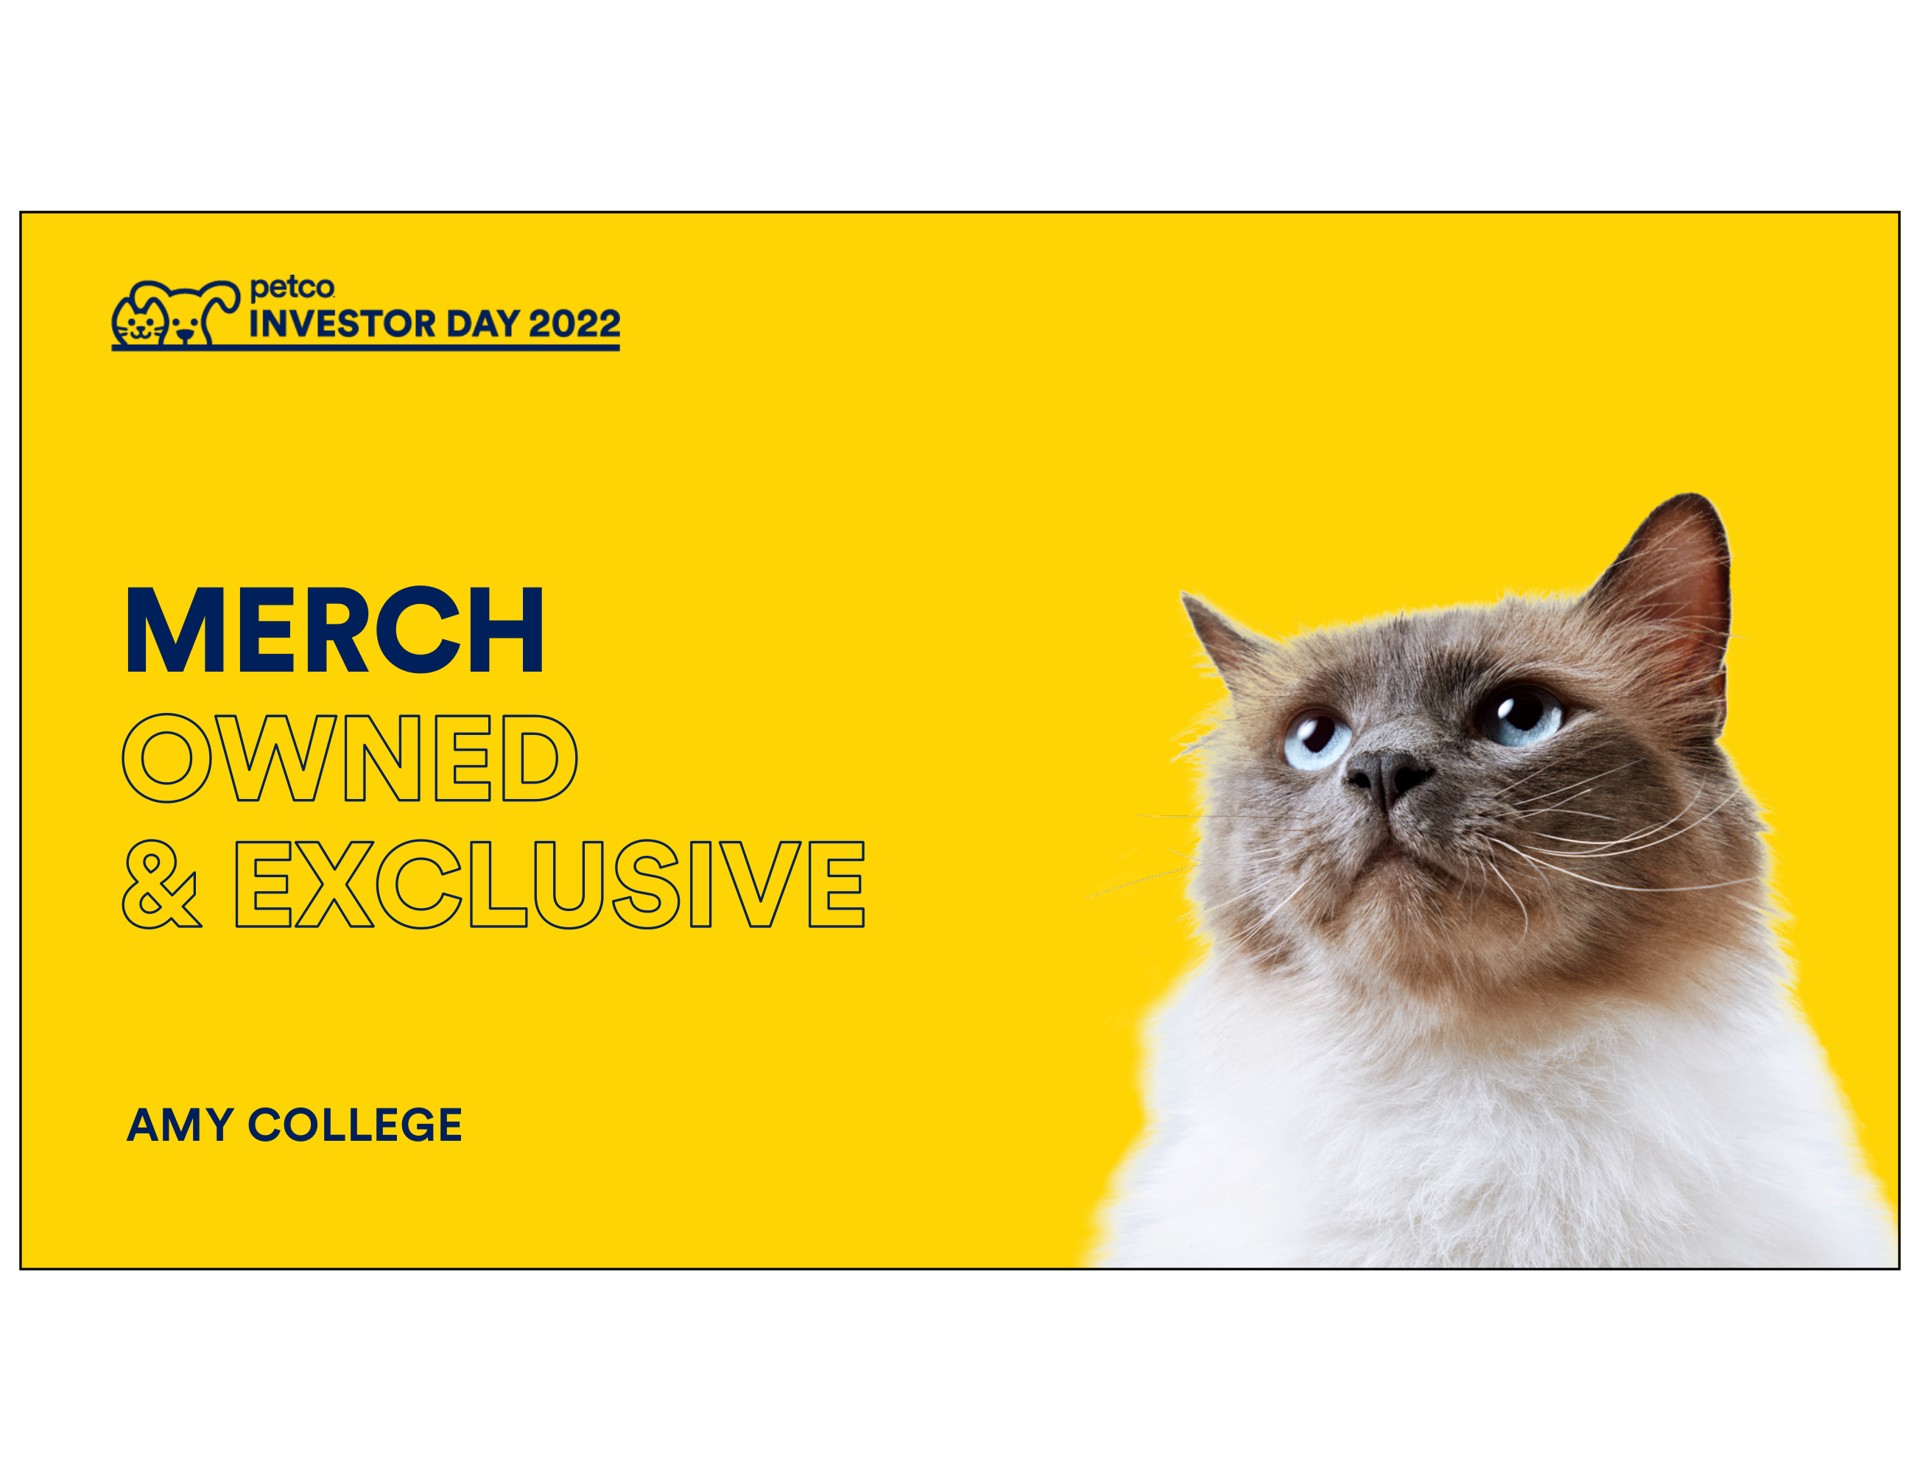 merch amy college investor day exclusive | Petco